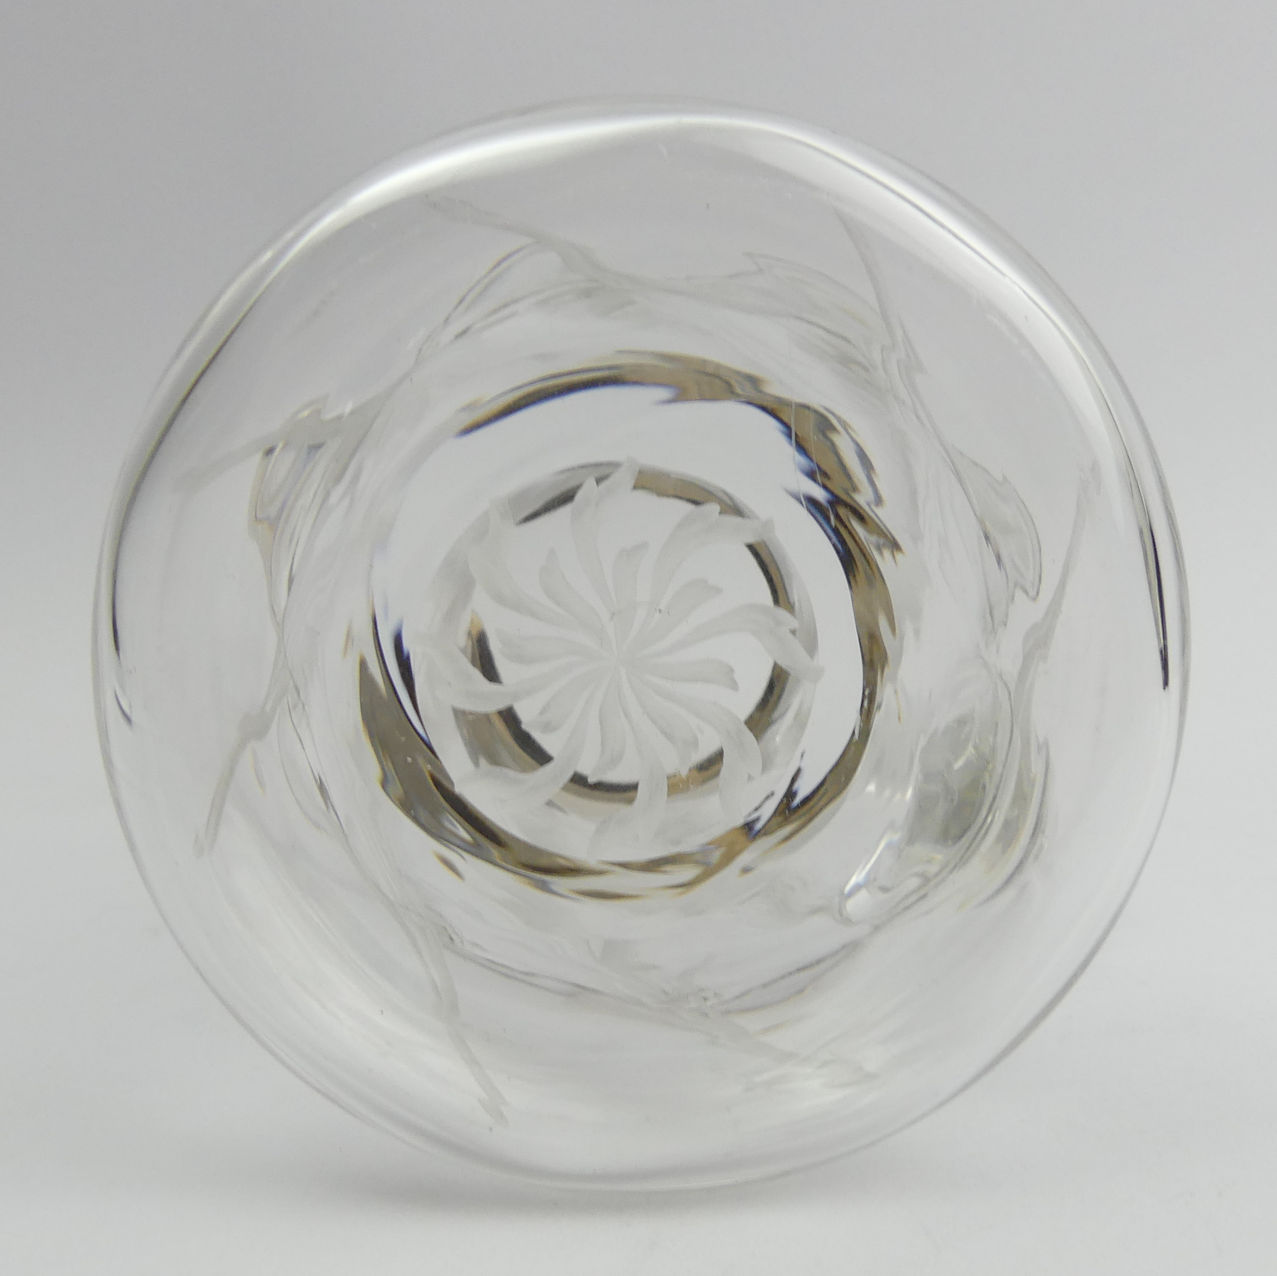 Art Nouveau silver mounted glass engraved glass water jug, Thomas Latham & Ernest Morton, Birm. - Image 5 of 5